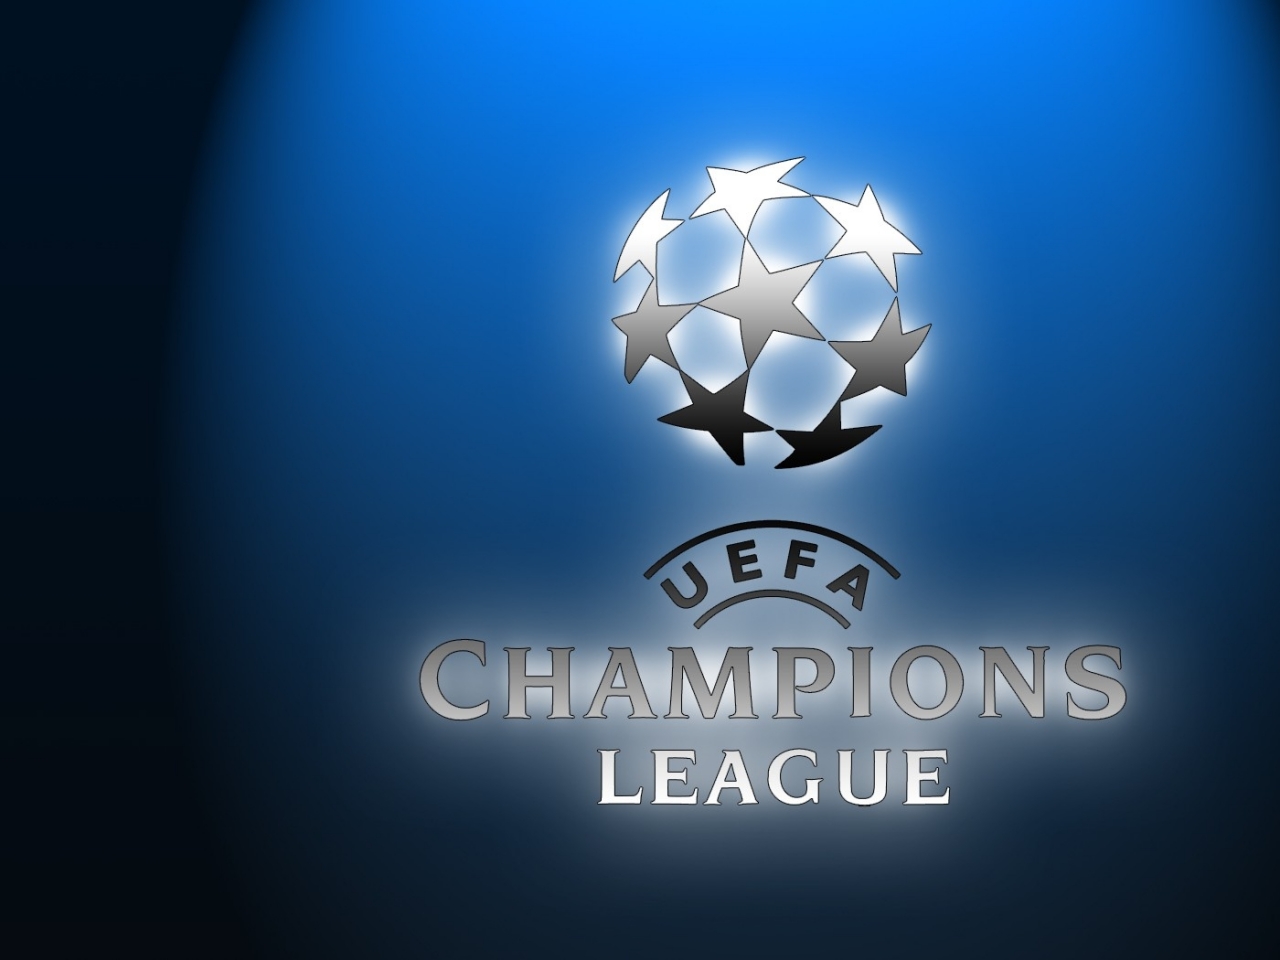 Uefa Champions League Logos